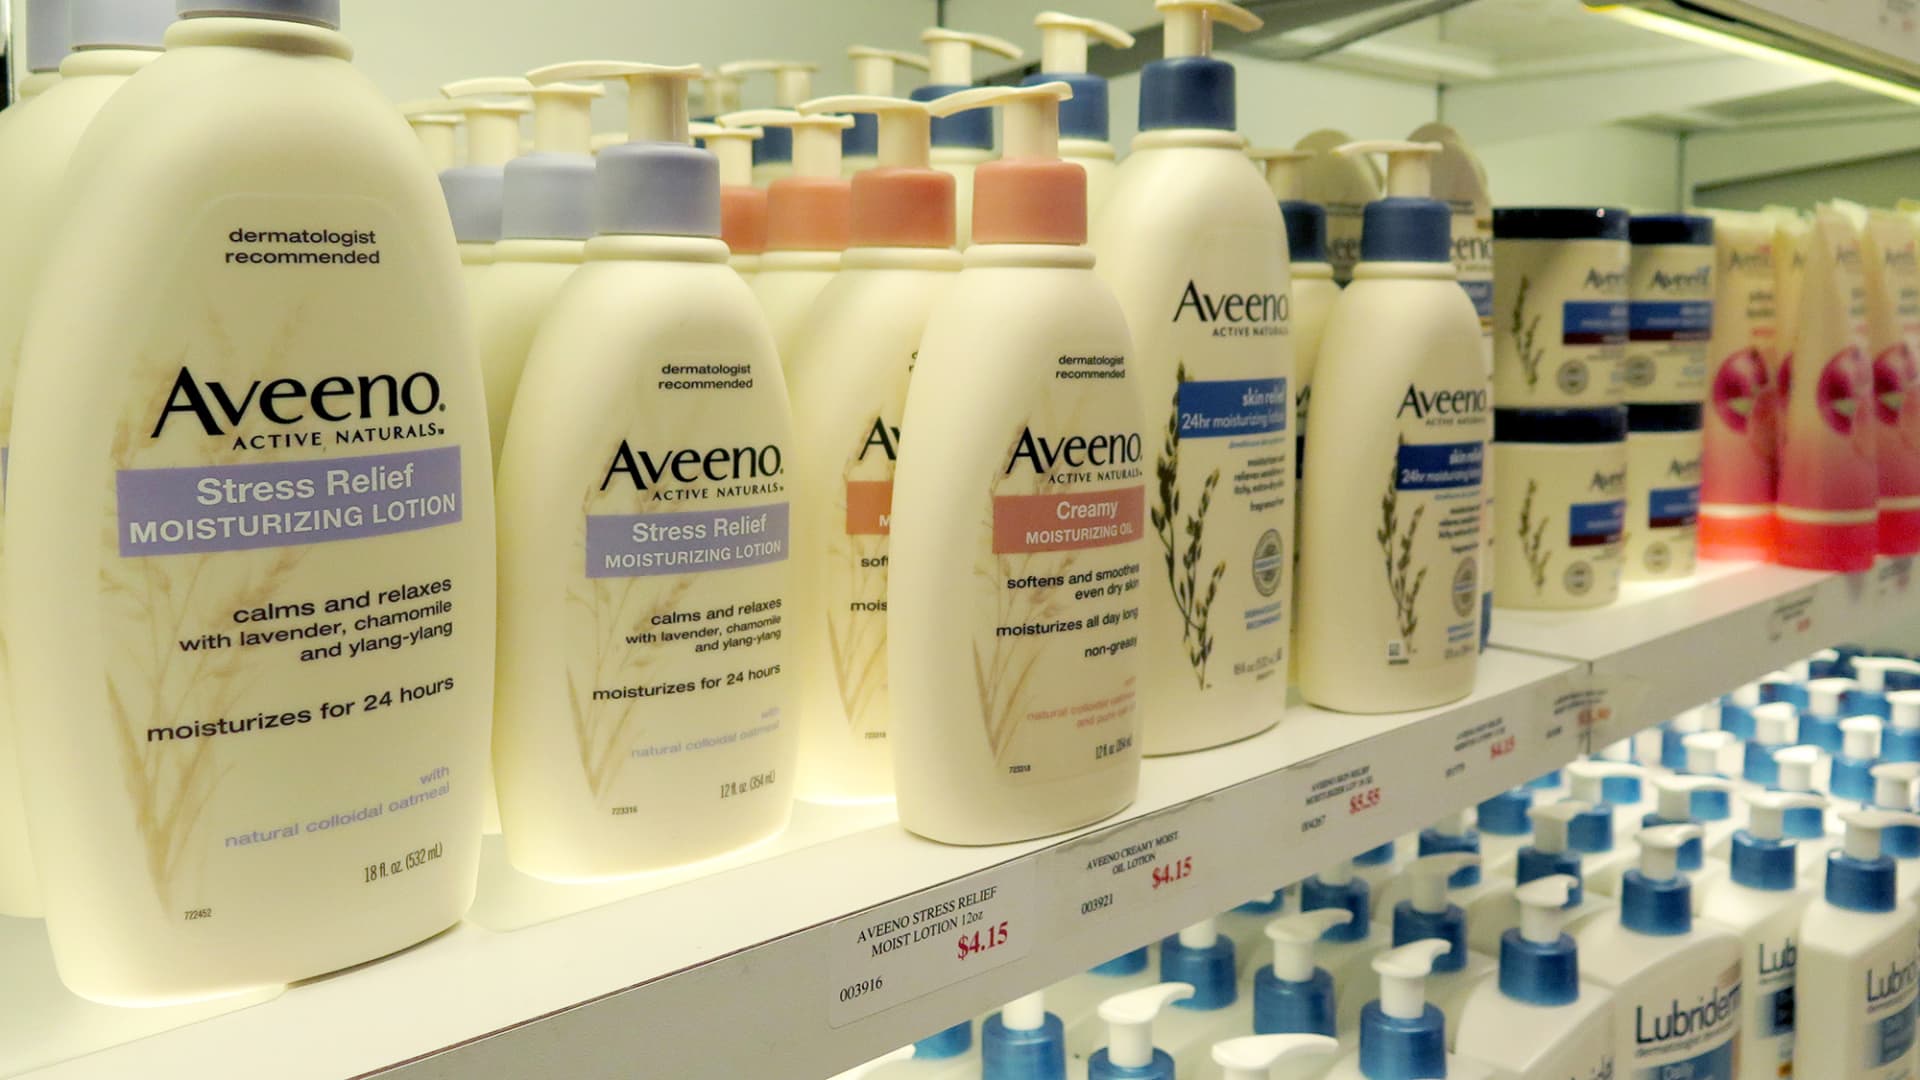 Aveeno skincare, a Johnson & Johnson product.